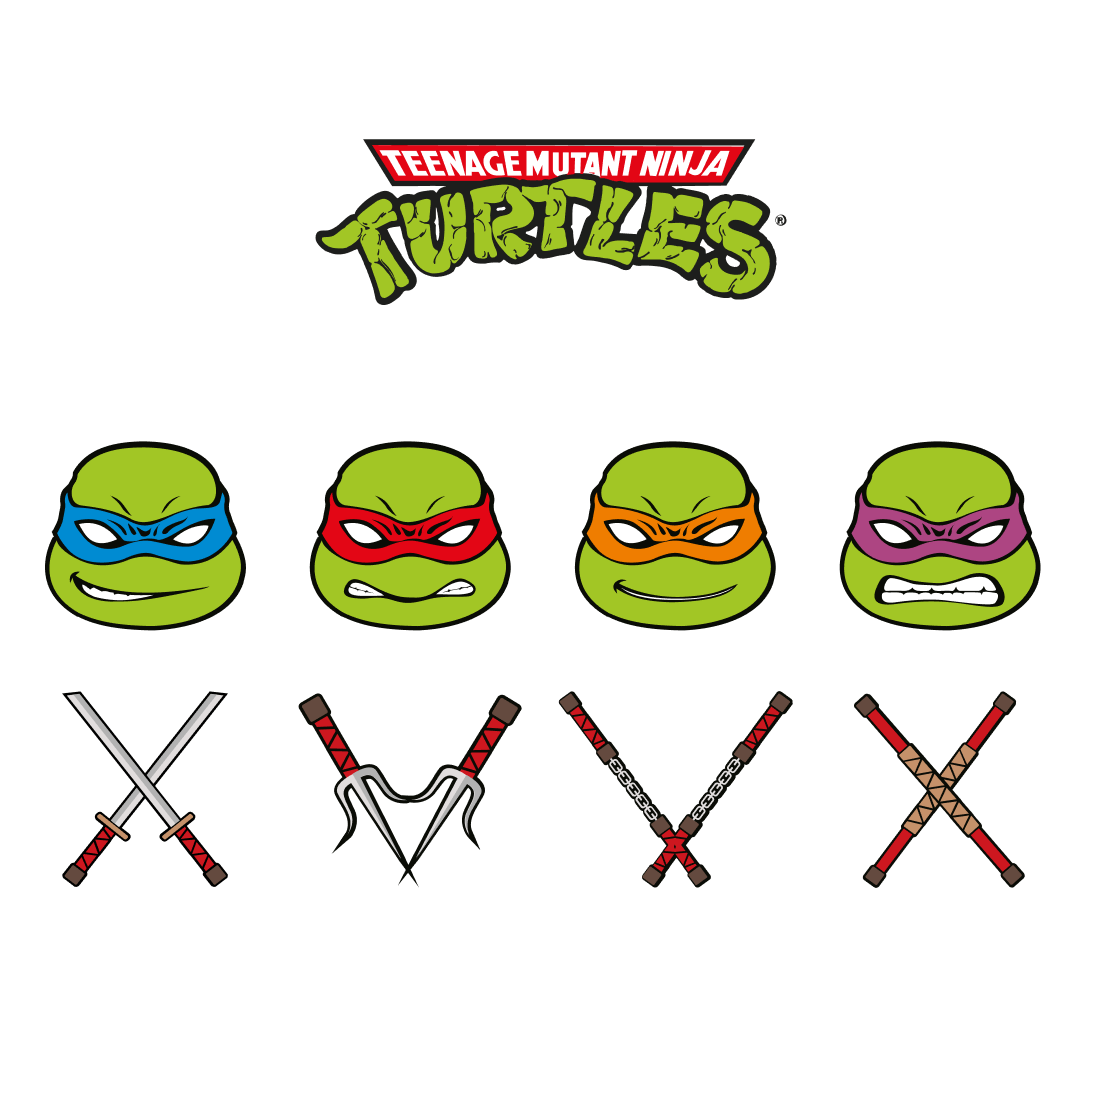 Teenage mutant ninja turtles with swords and swords.